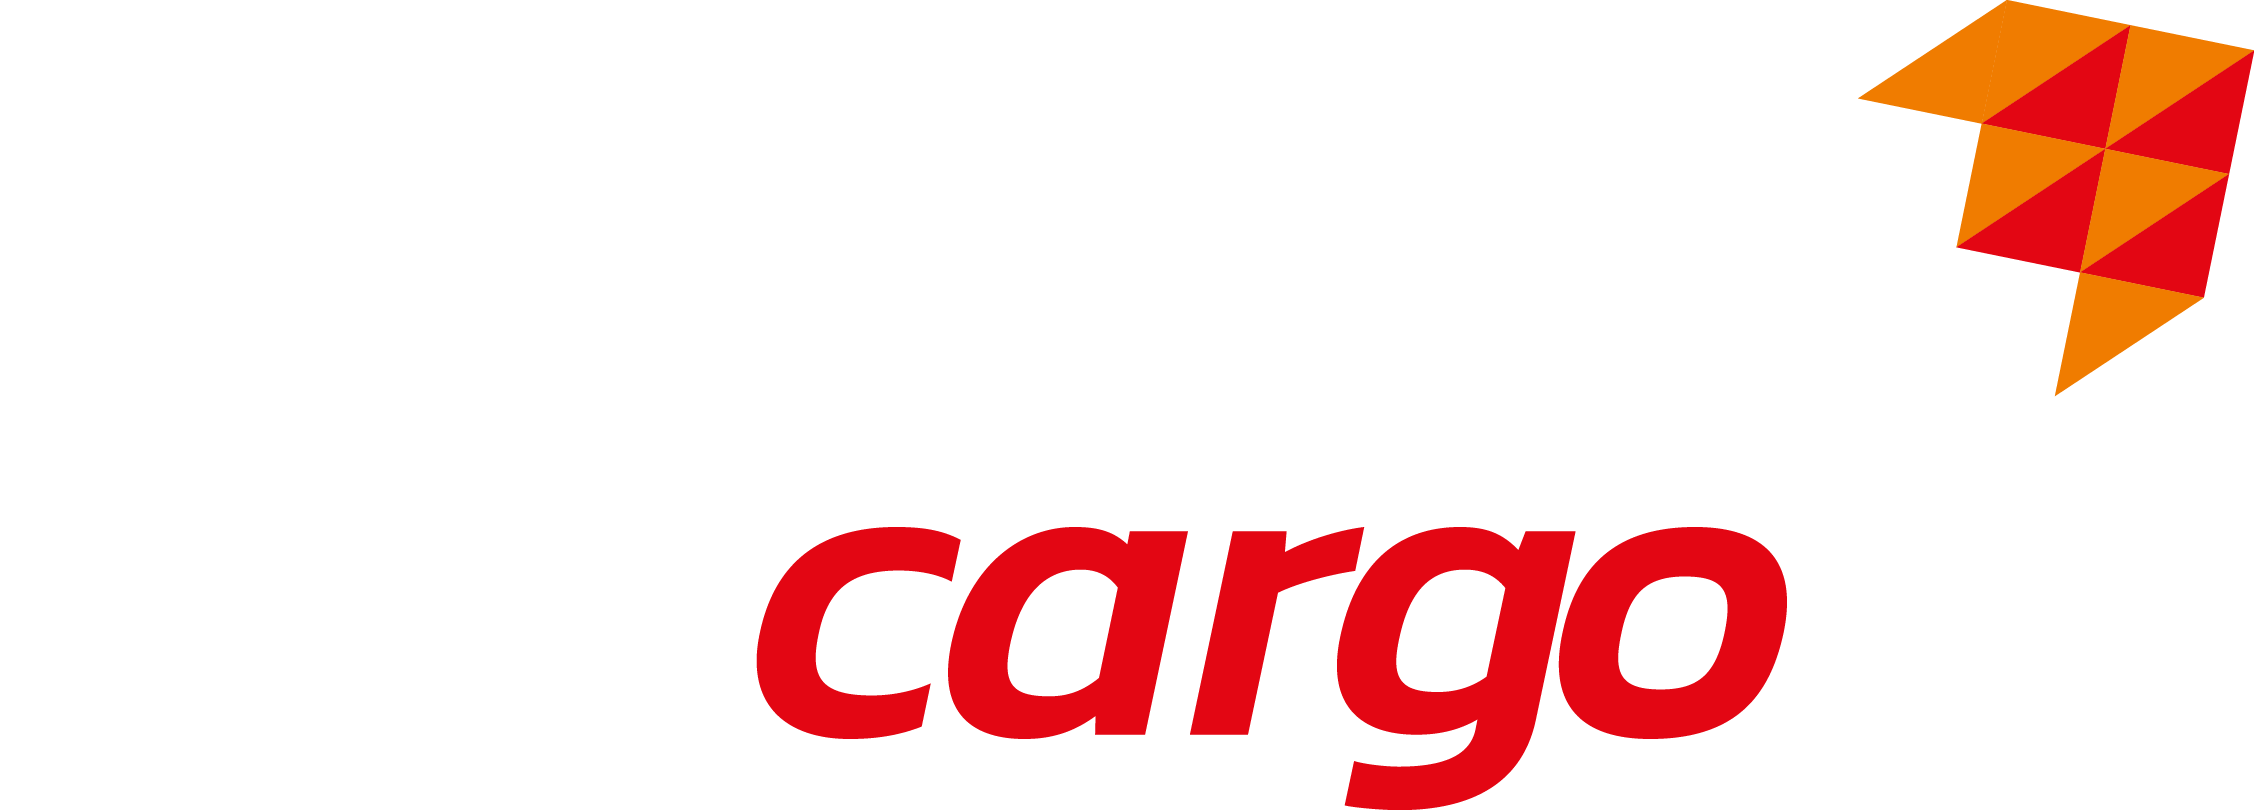 Mr Rocket Cargo